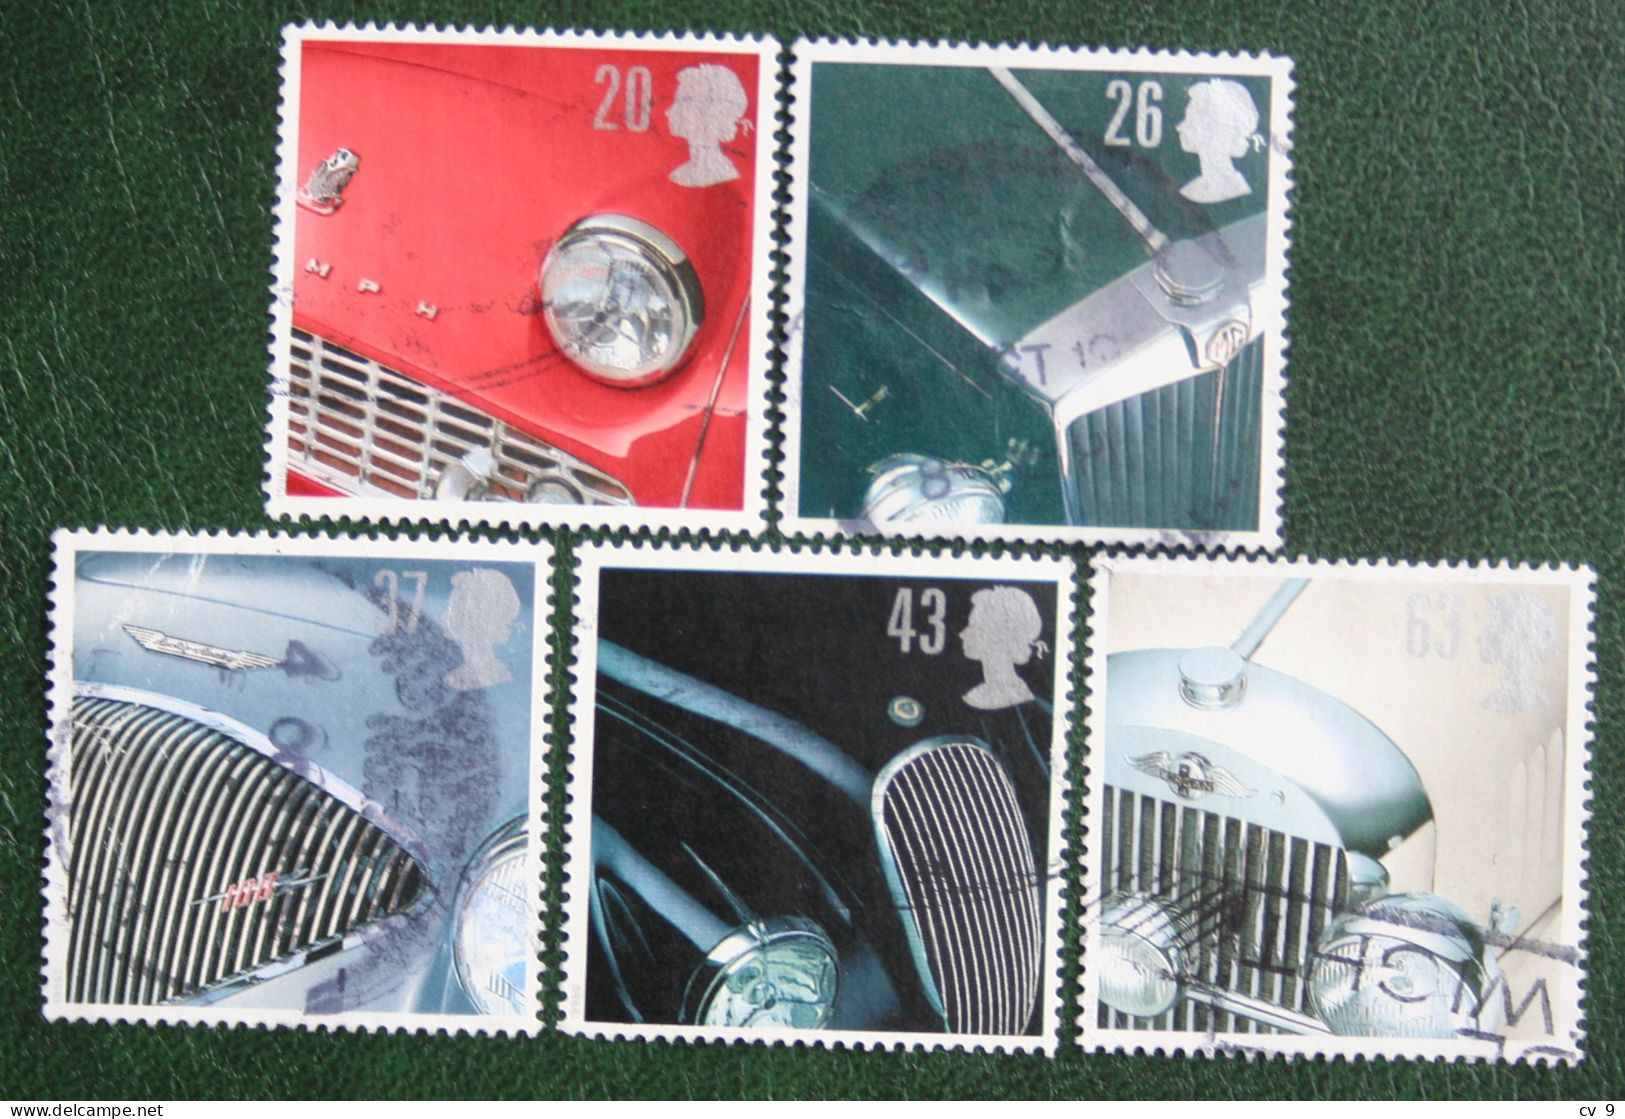 CLASSIC SPORTS CARS Auto Voiture (Mi 1657-1661) 1996 Used Gebruikt Oblitere ENGLAND GRANDE-BRETAGNE GB GREAT BRITAIN - Used Stamps